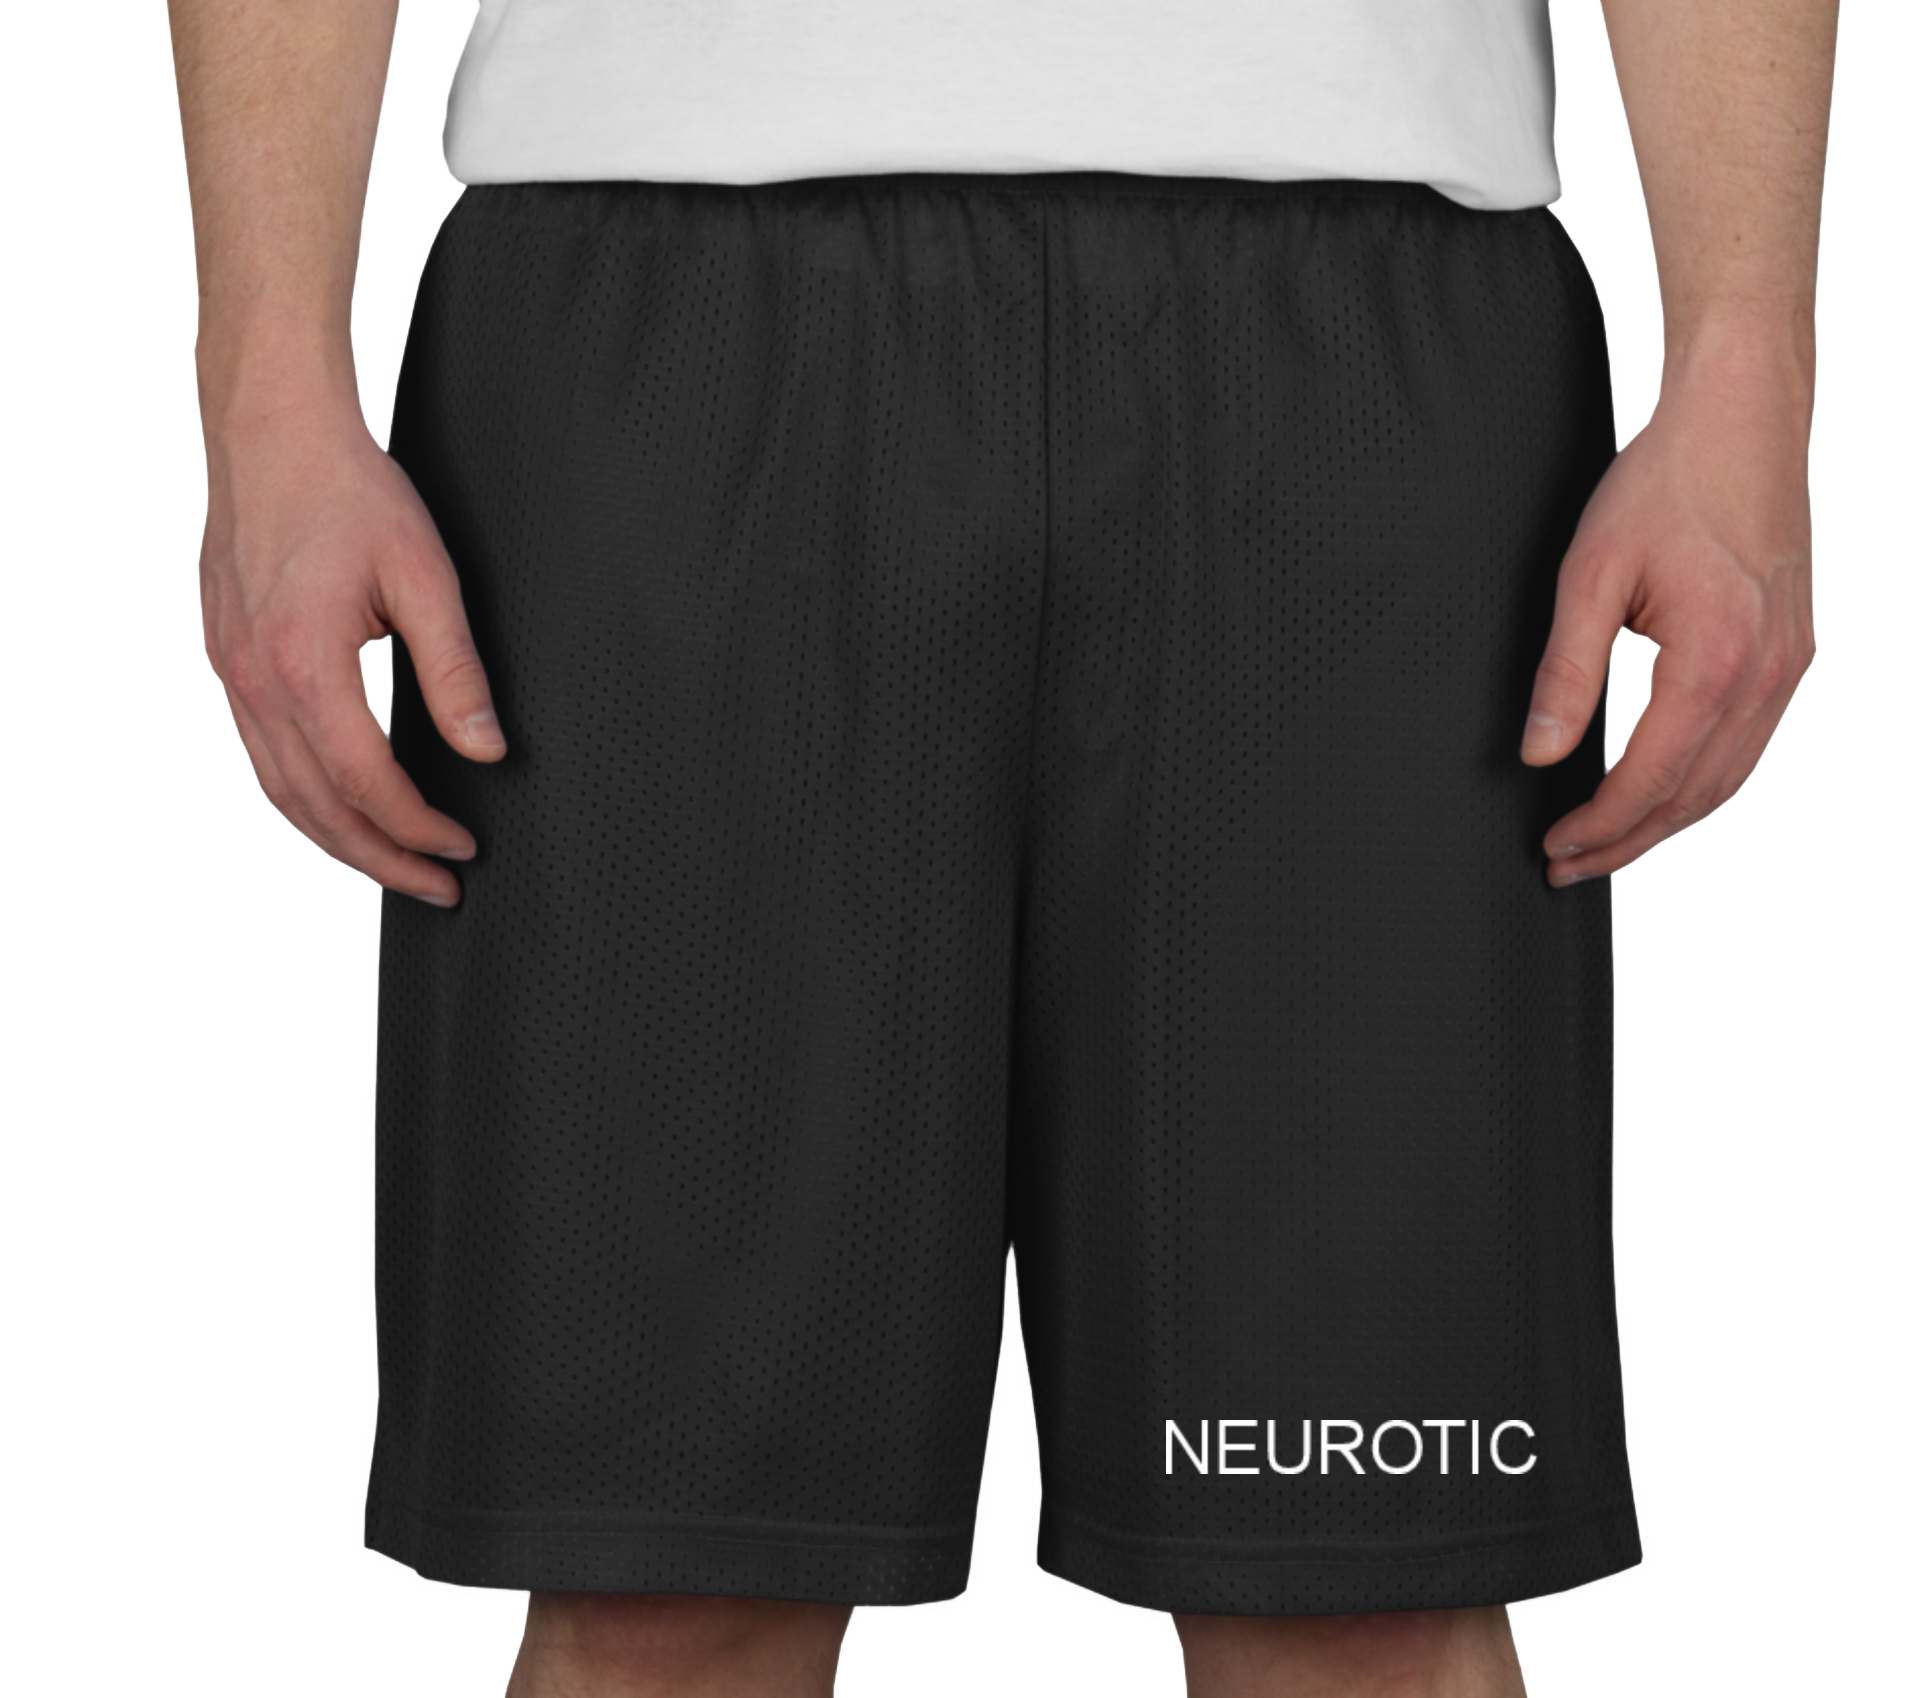 Neurotic Shorts - $12.99